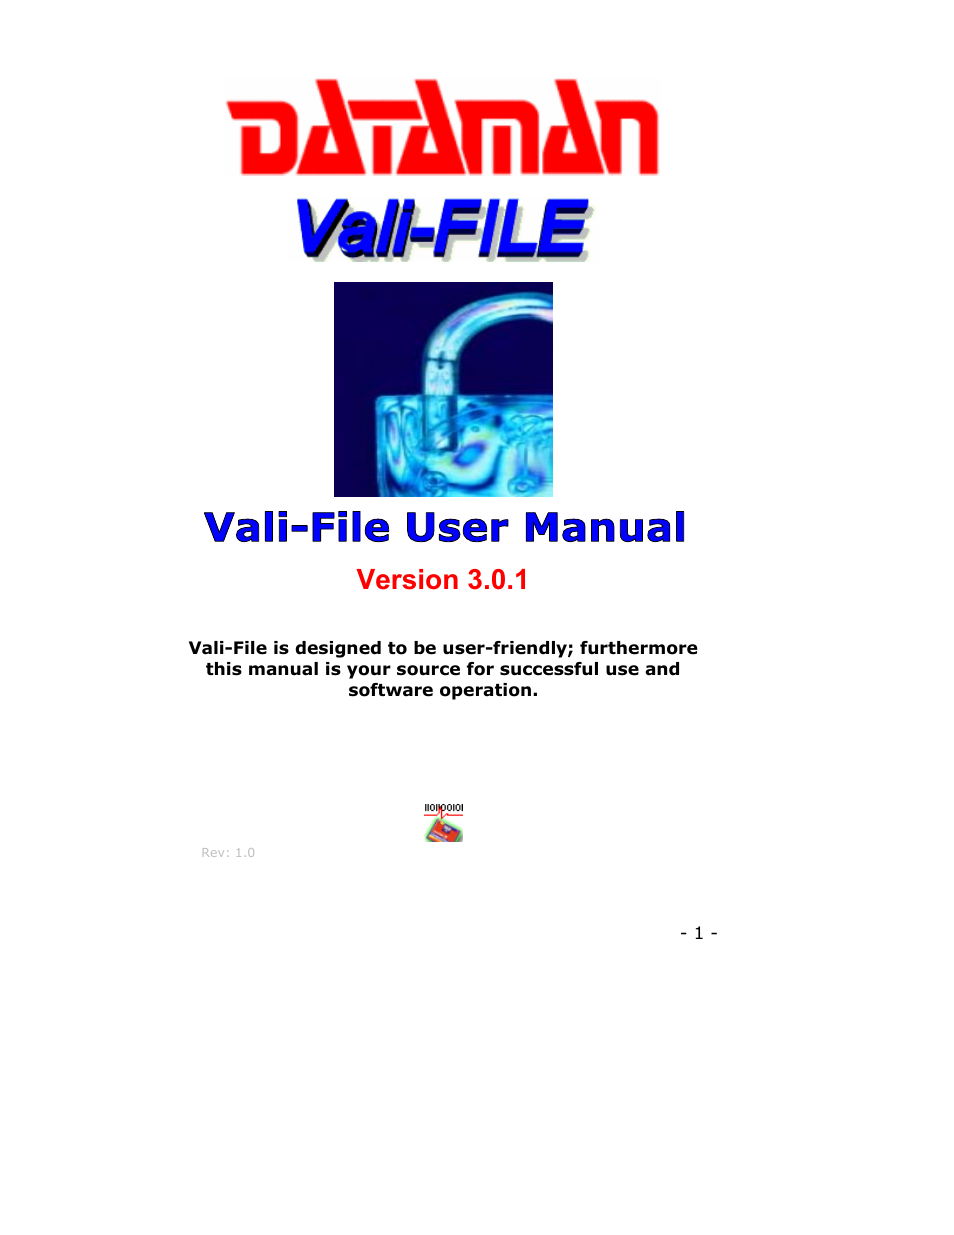 Vali-File 3.0